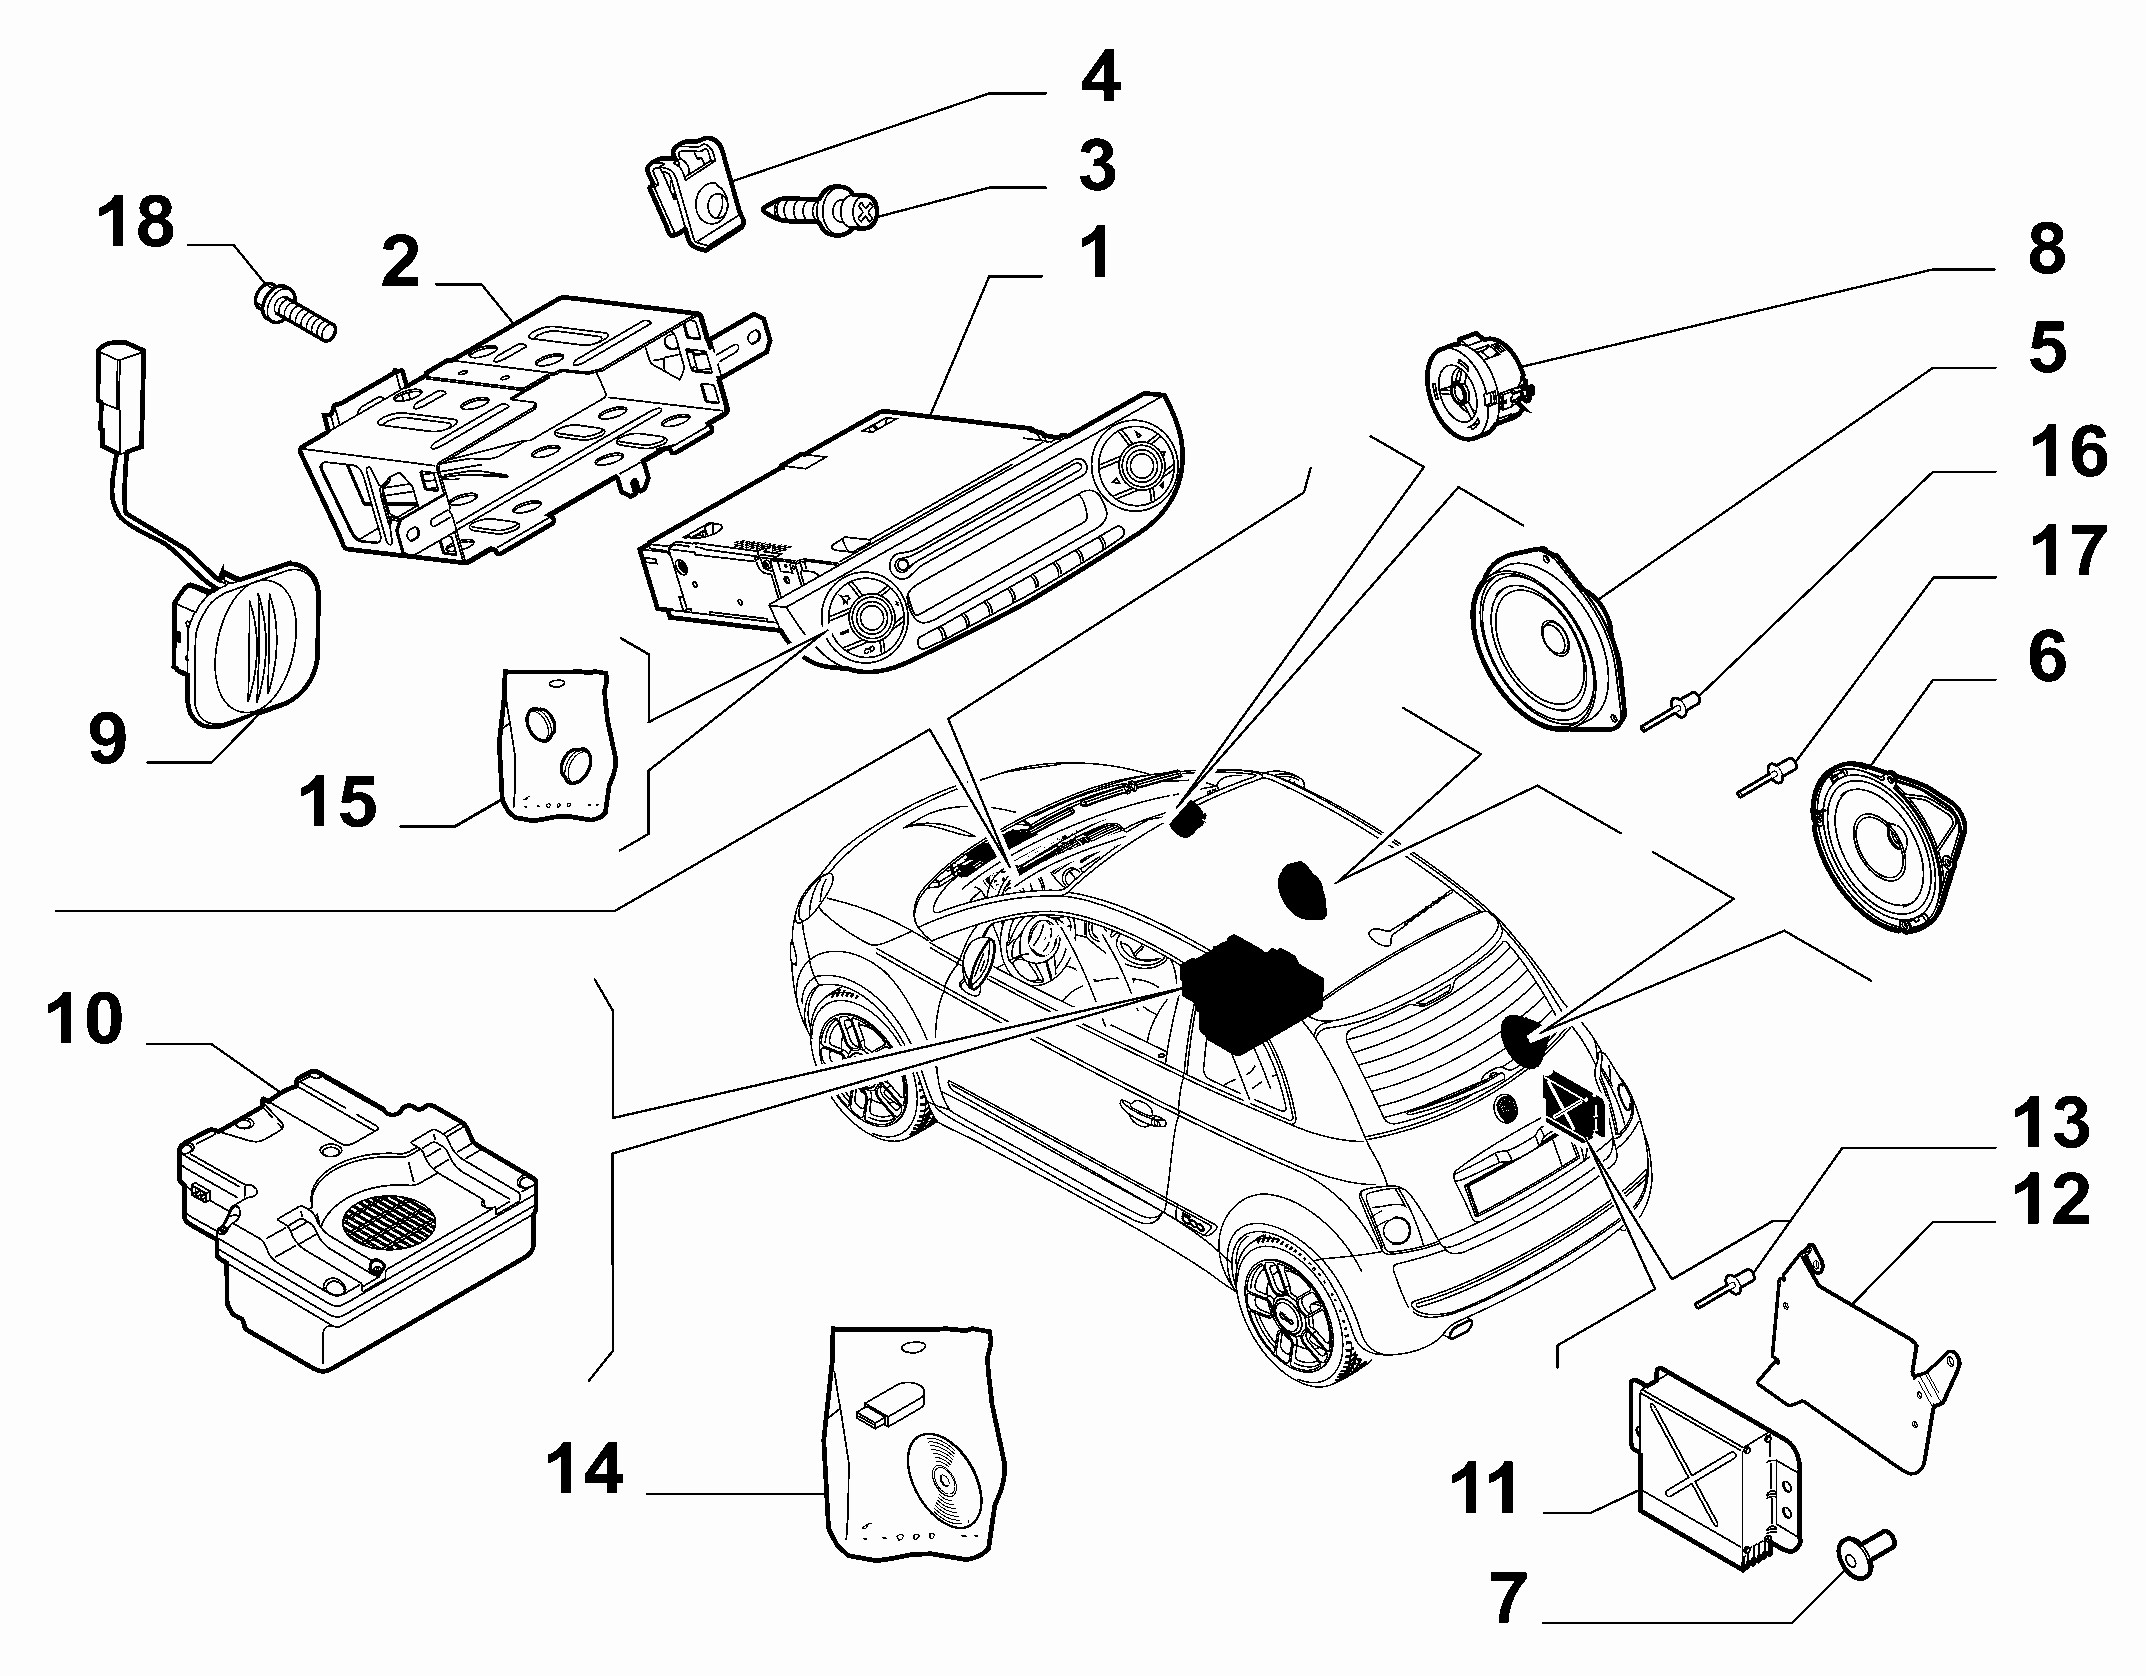 Car Turbo Diagram Abarth Electronic System Apparatus and Electric Controls Of Car Turbo Diagram